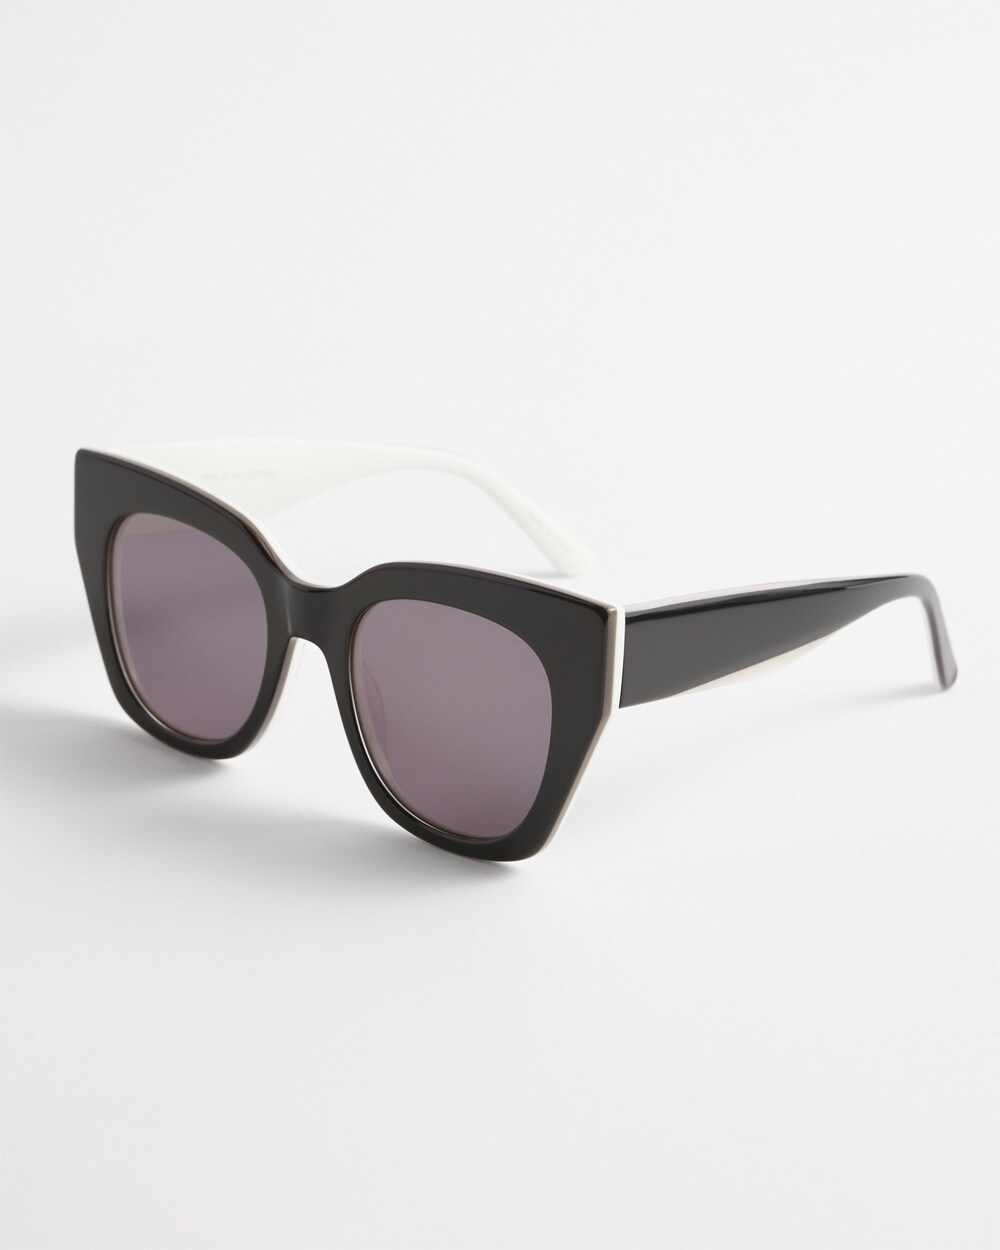 Black and White Cateye Sunglasses